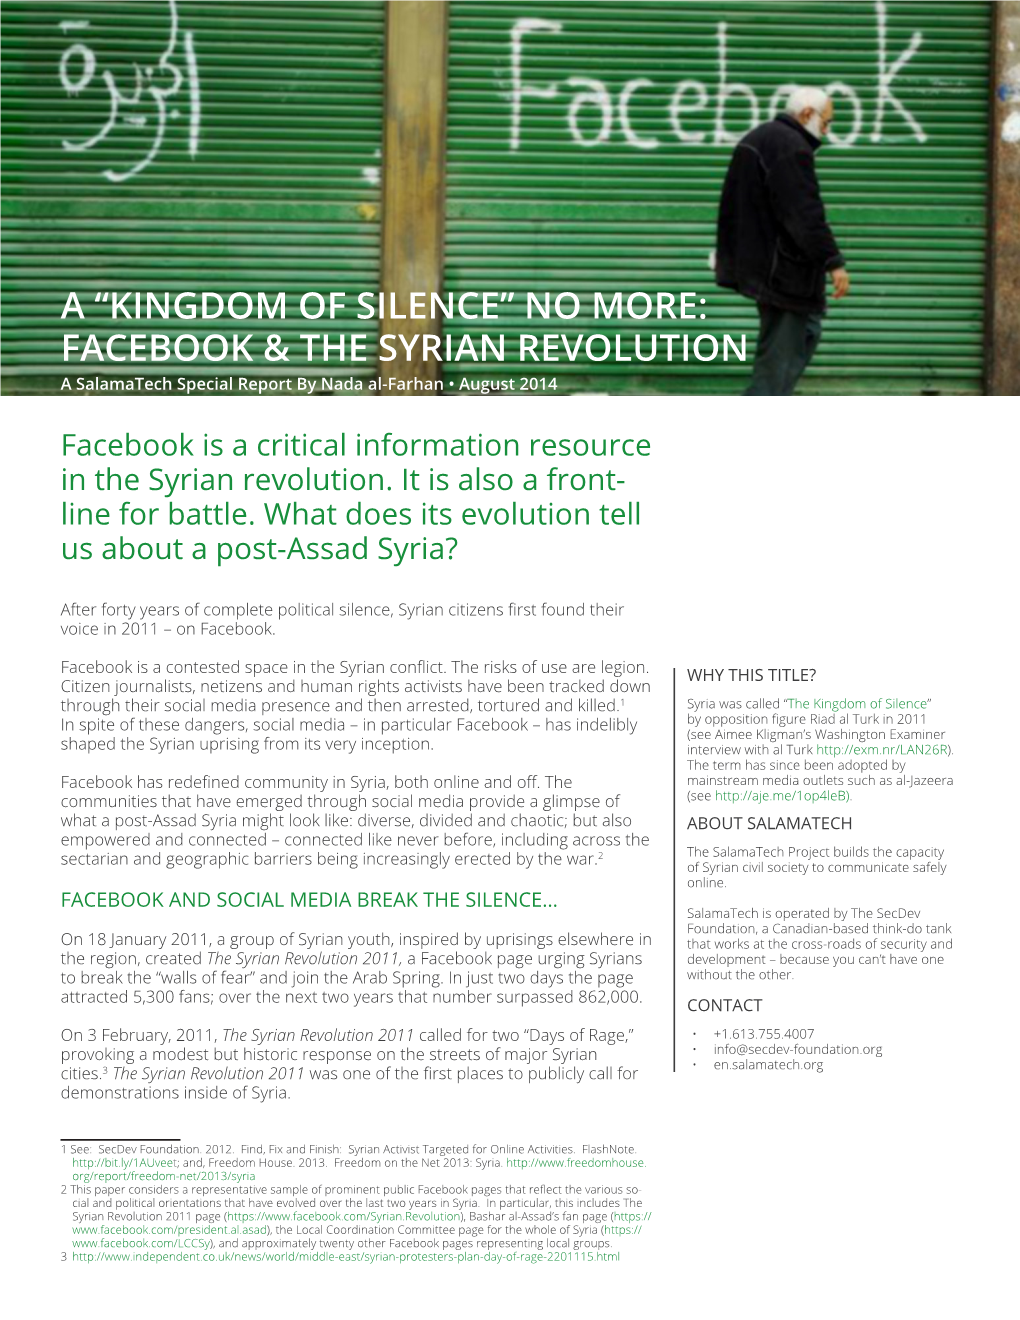 Facebook & the Syrian Revolution